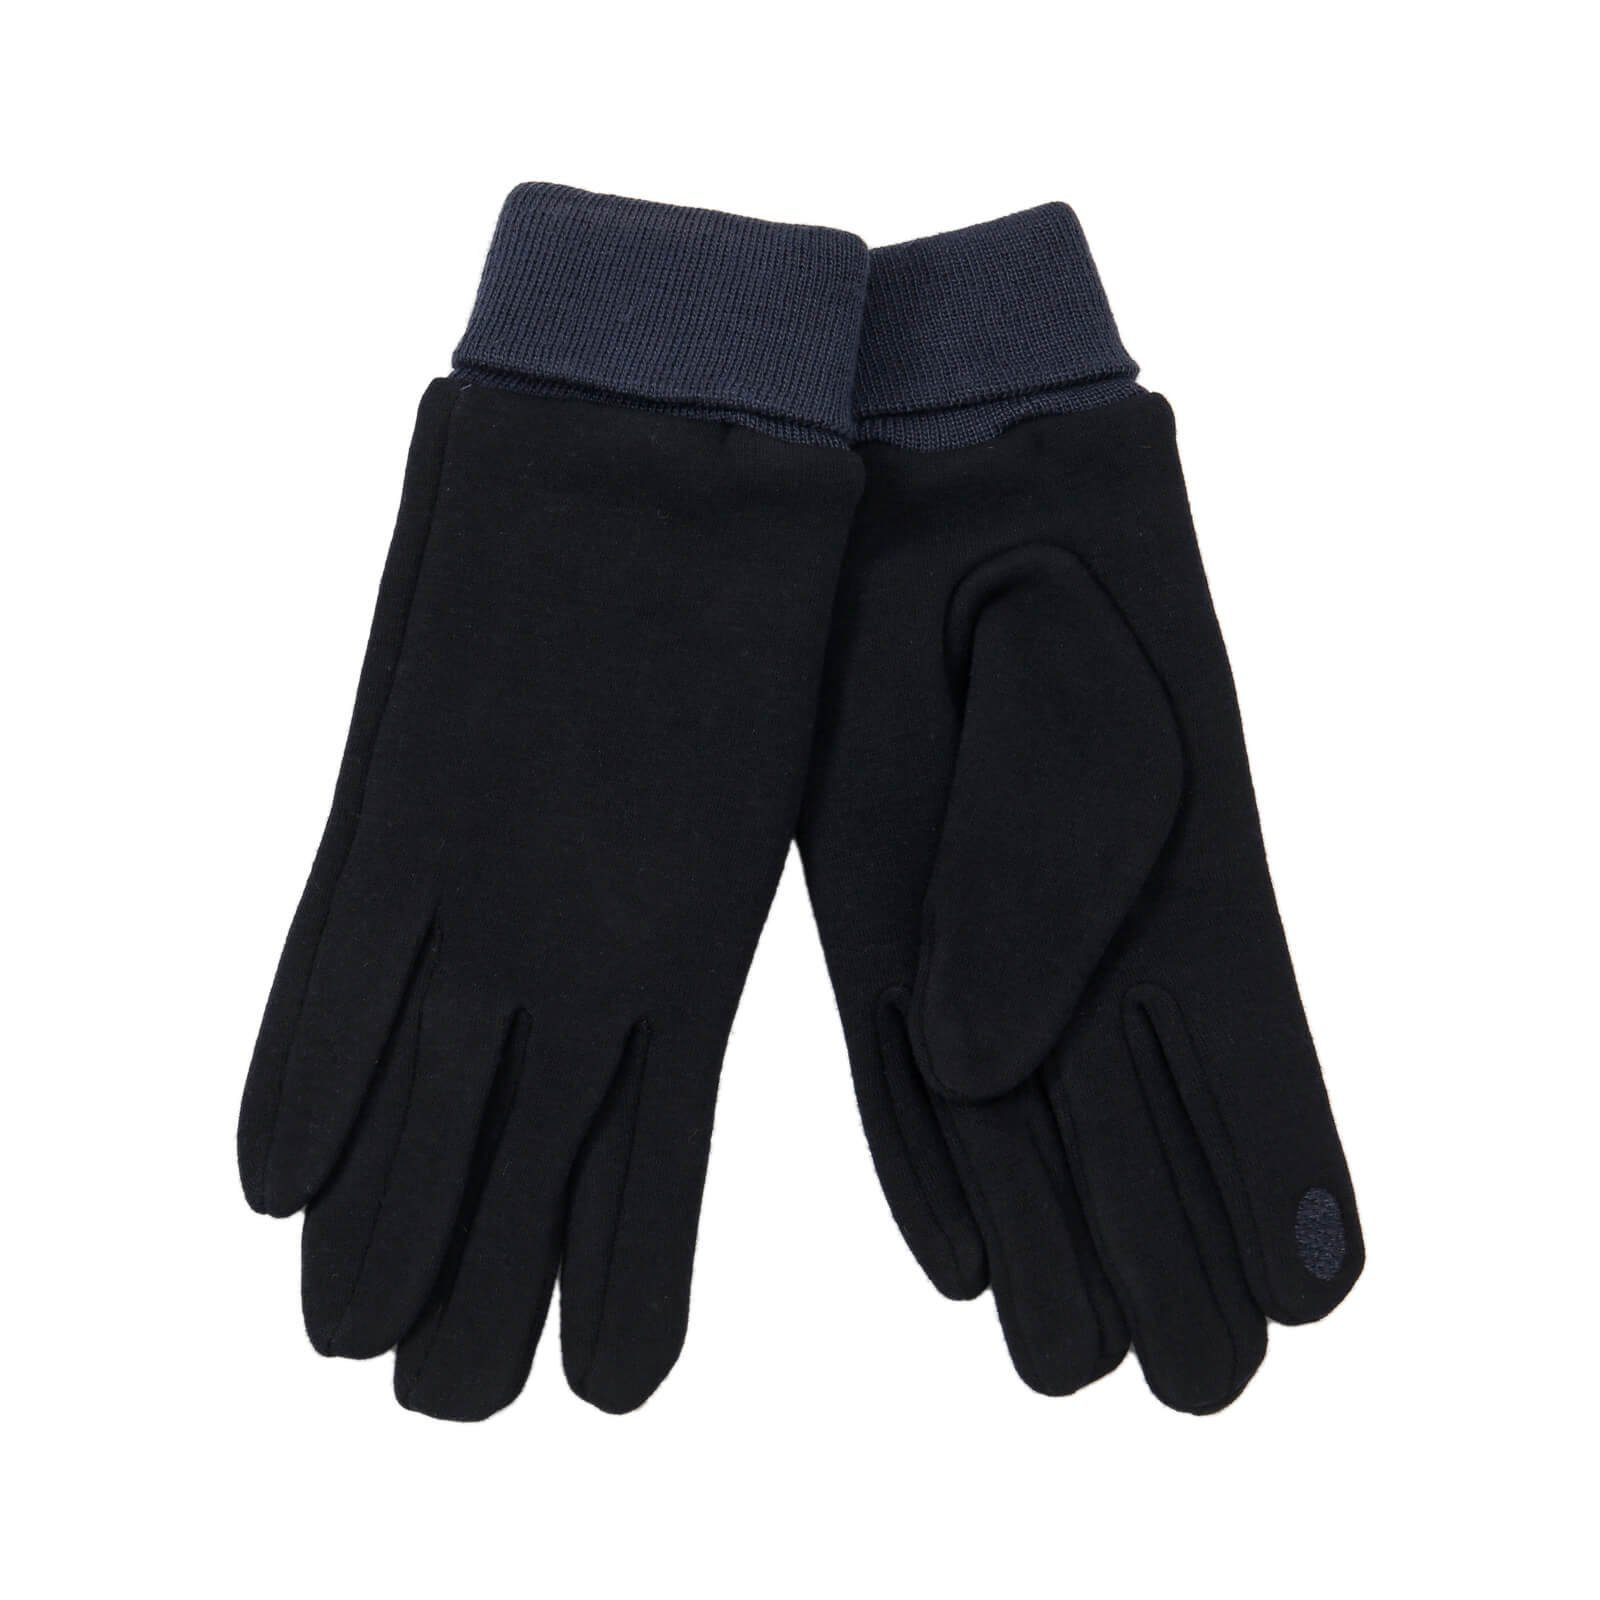 Leoberg Strickmütze Herren Handschuhe Winterhandschuhe in verschiedenen Farben und Designs 252015-Navy-3